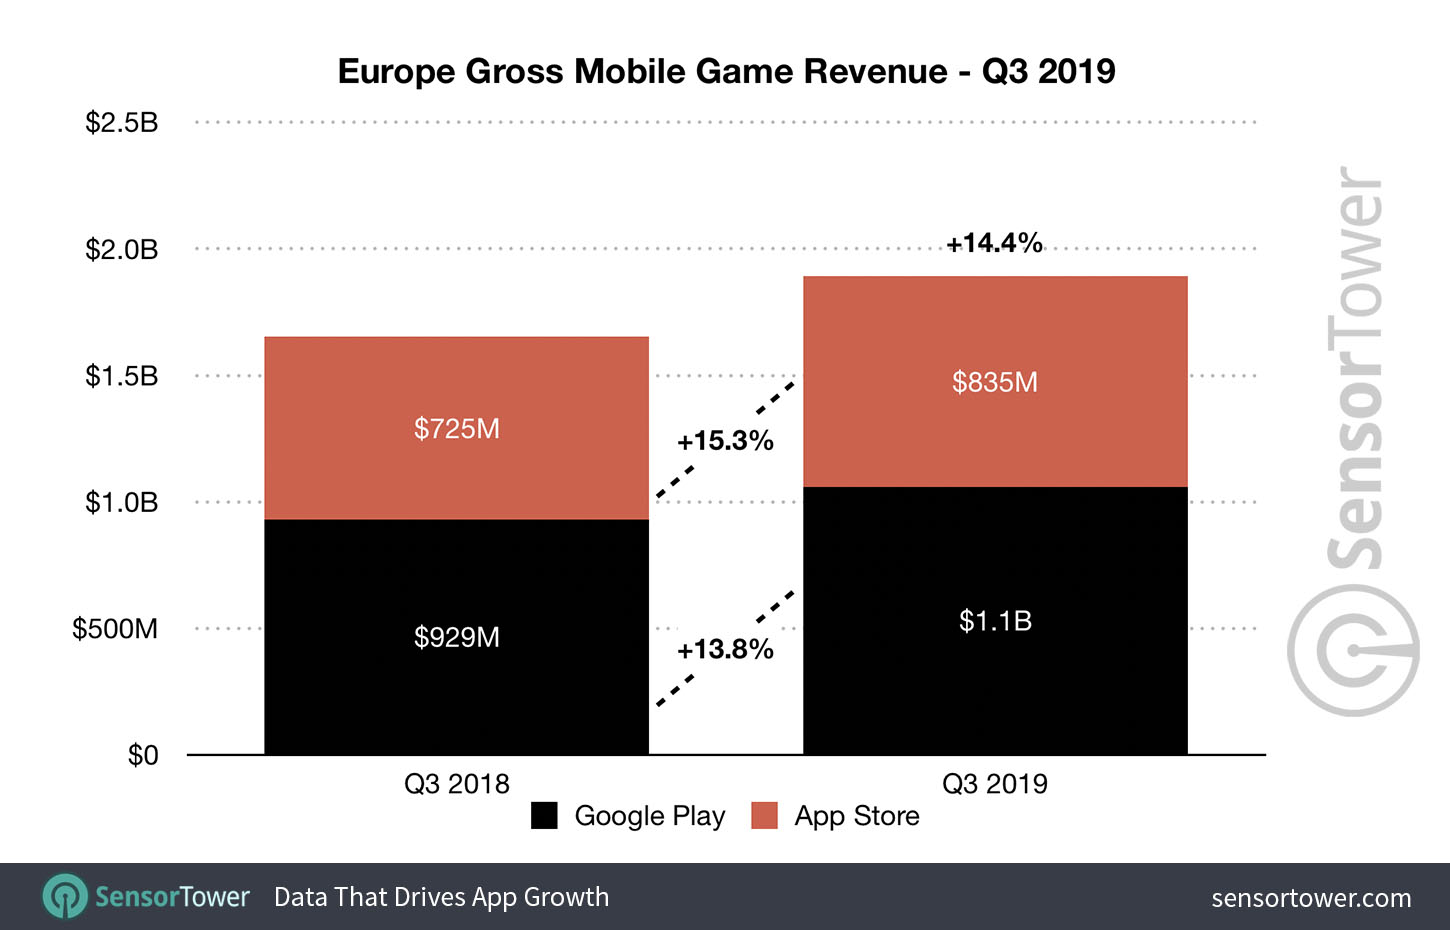 Q3 2019 Mobile Game Revenue for Europe